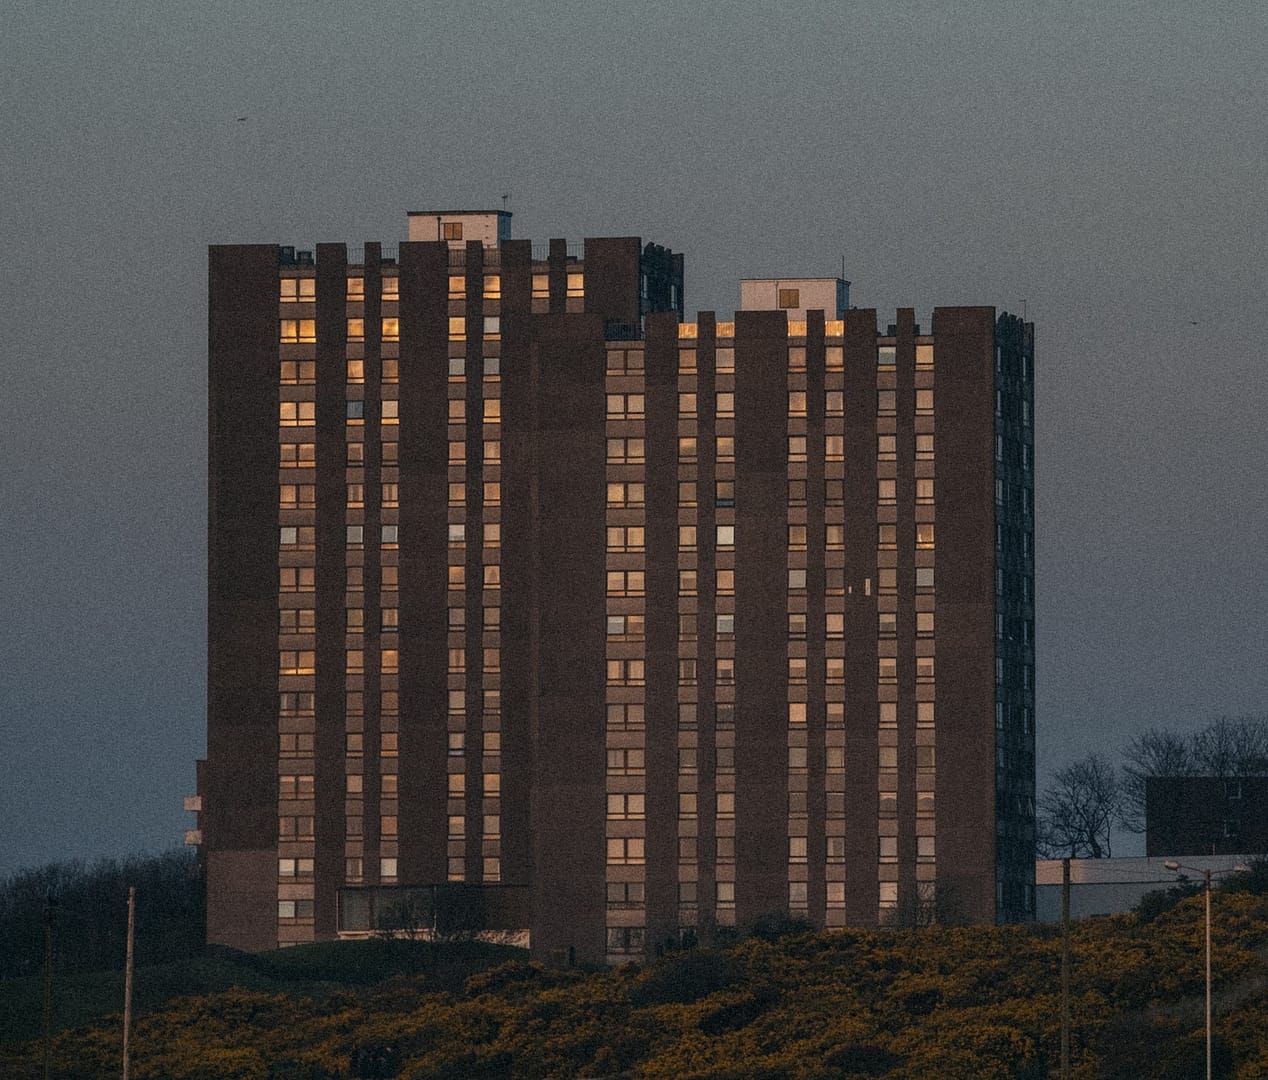 High rise block of flats